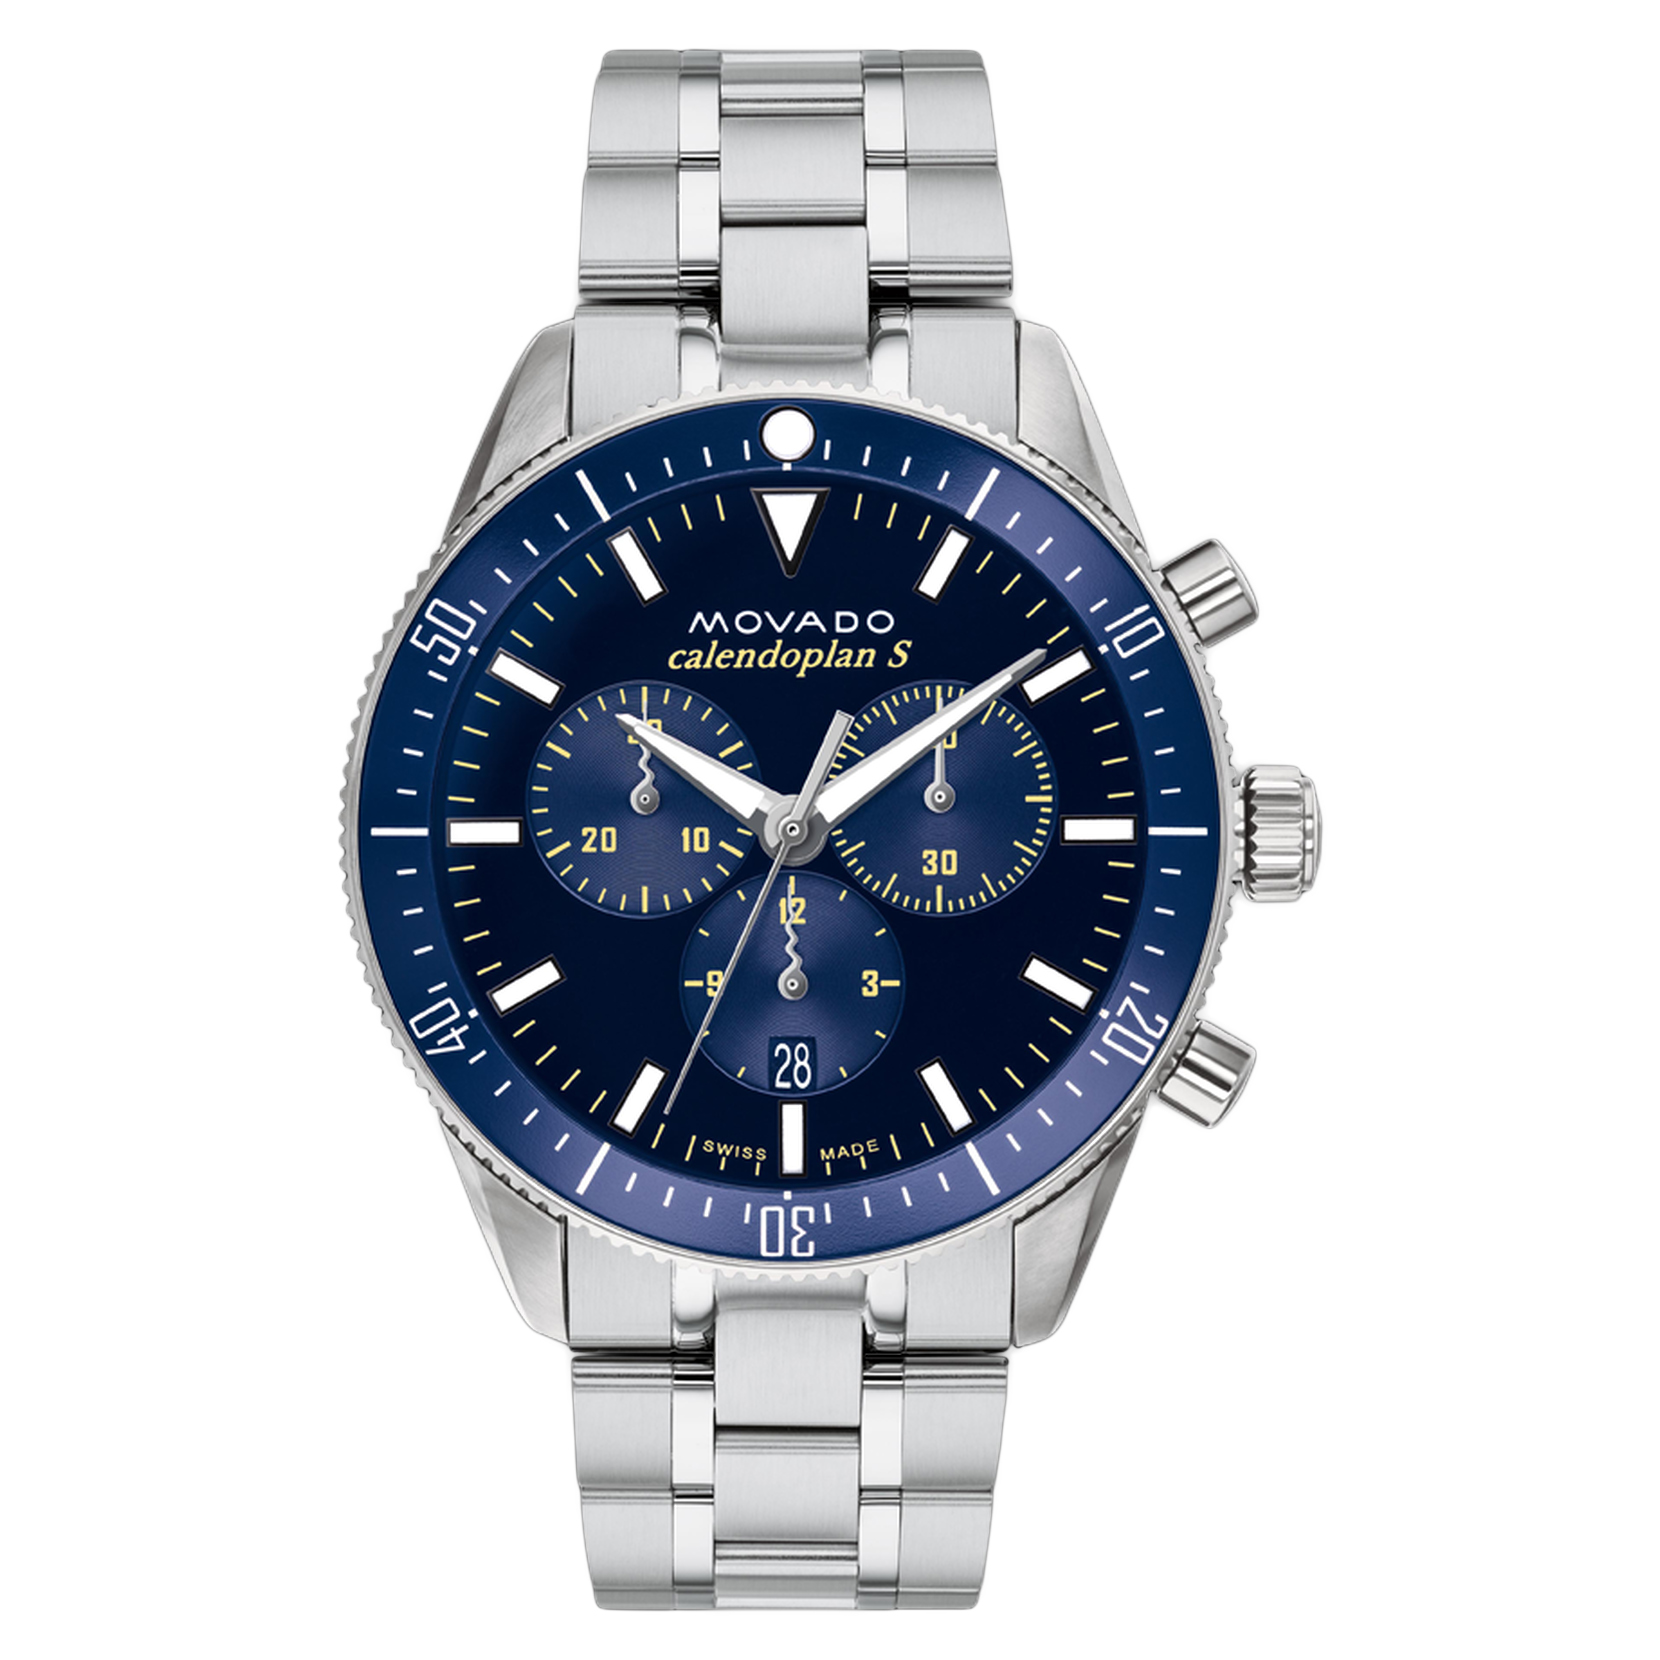 Movado Men's Calendoplan Blue Dial Watch - 3650124